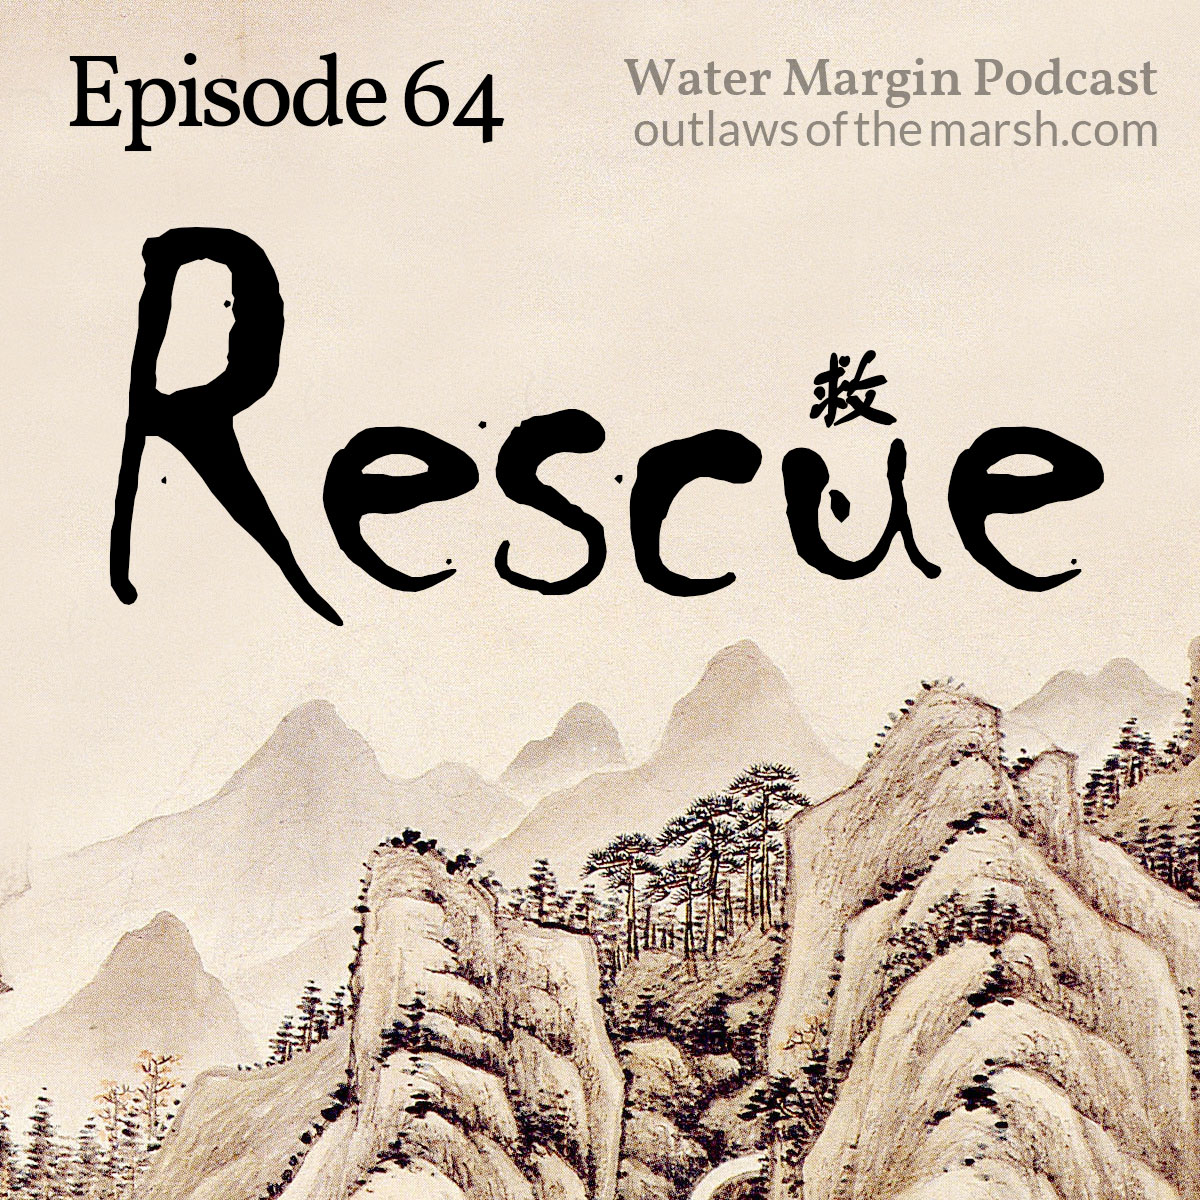 Water Margin Podcast: Episode 064